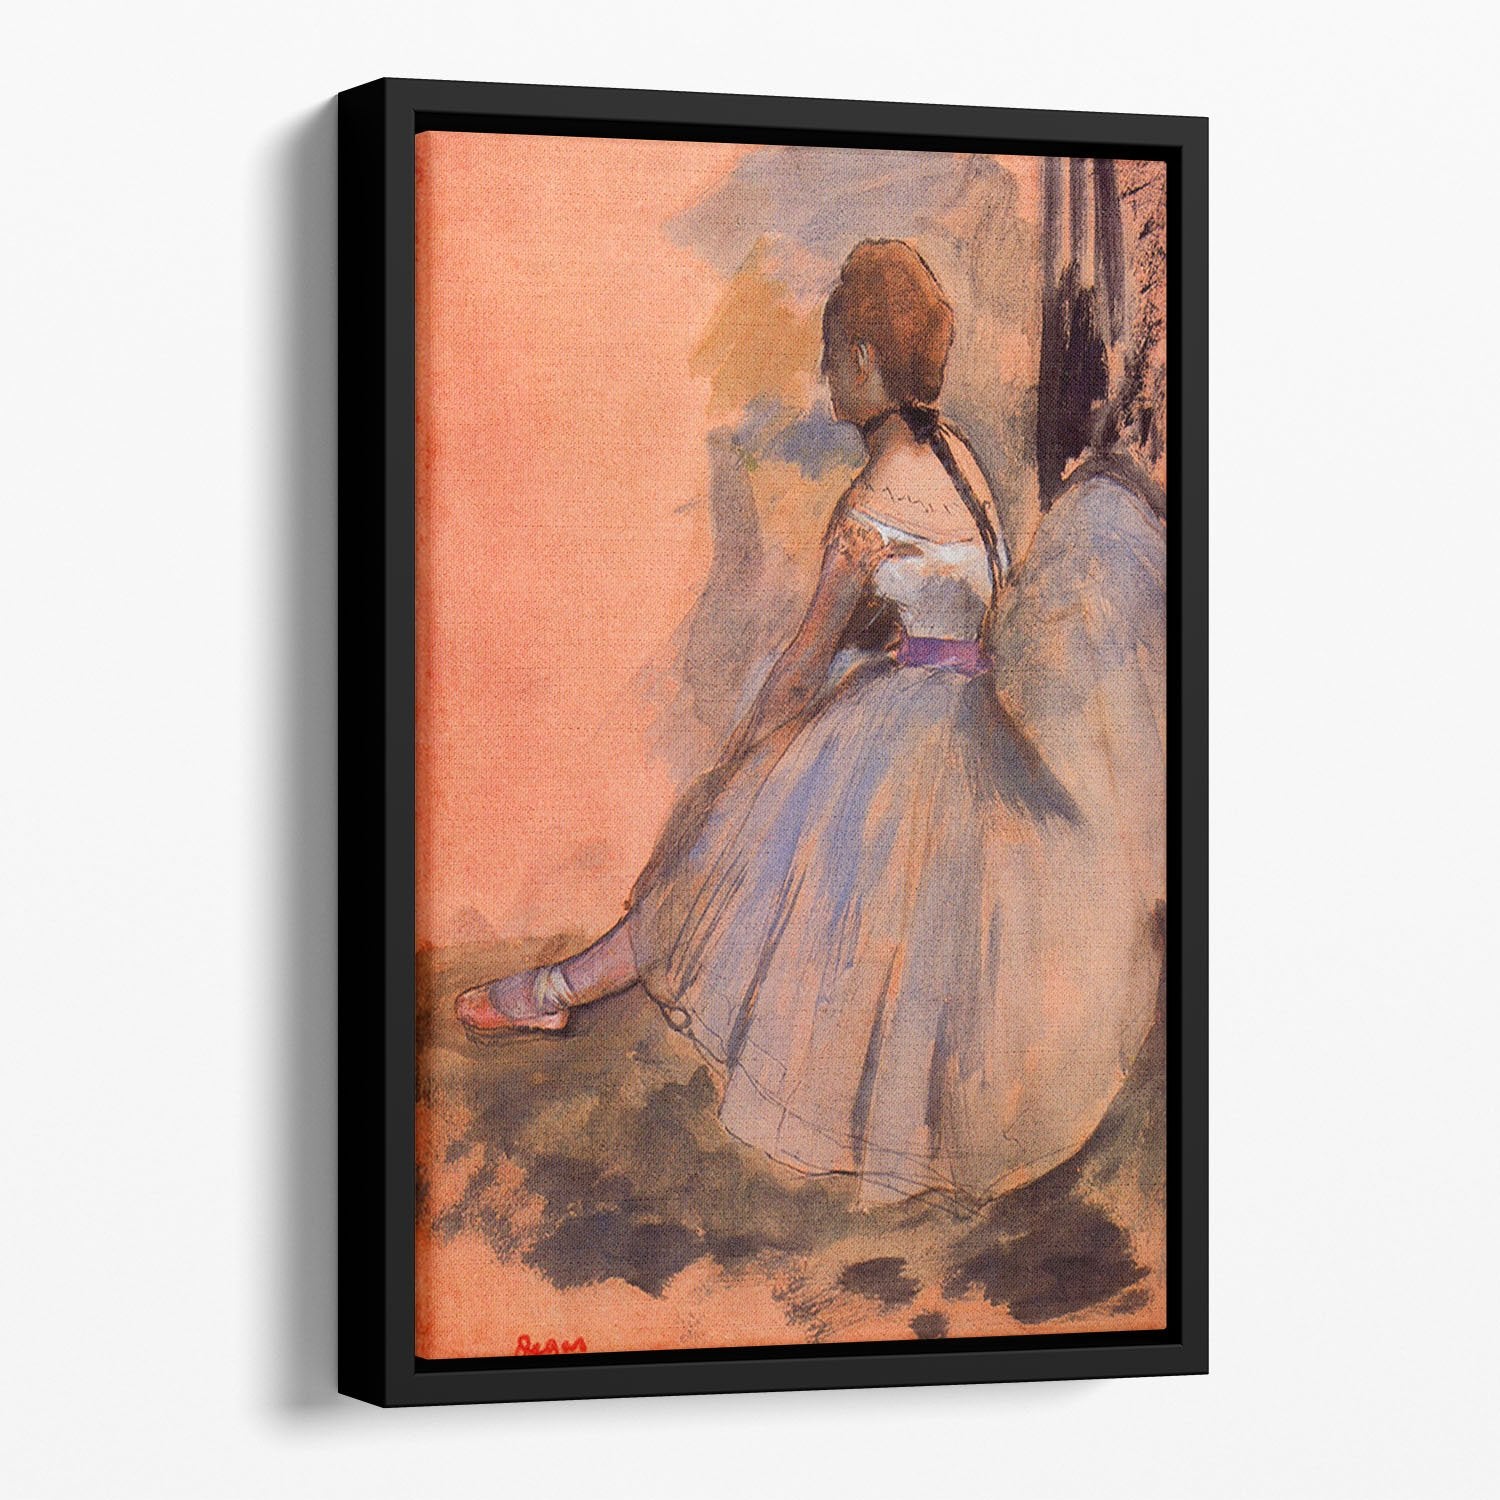 Sitting dancer with extended left leg by Degas Floating Framed Canvas